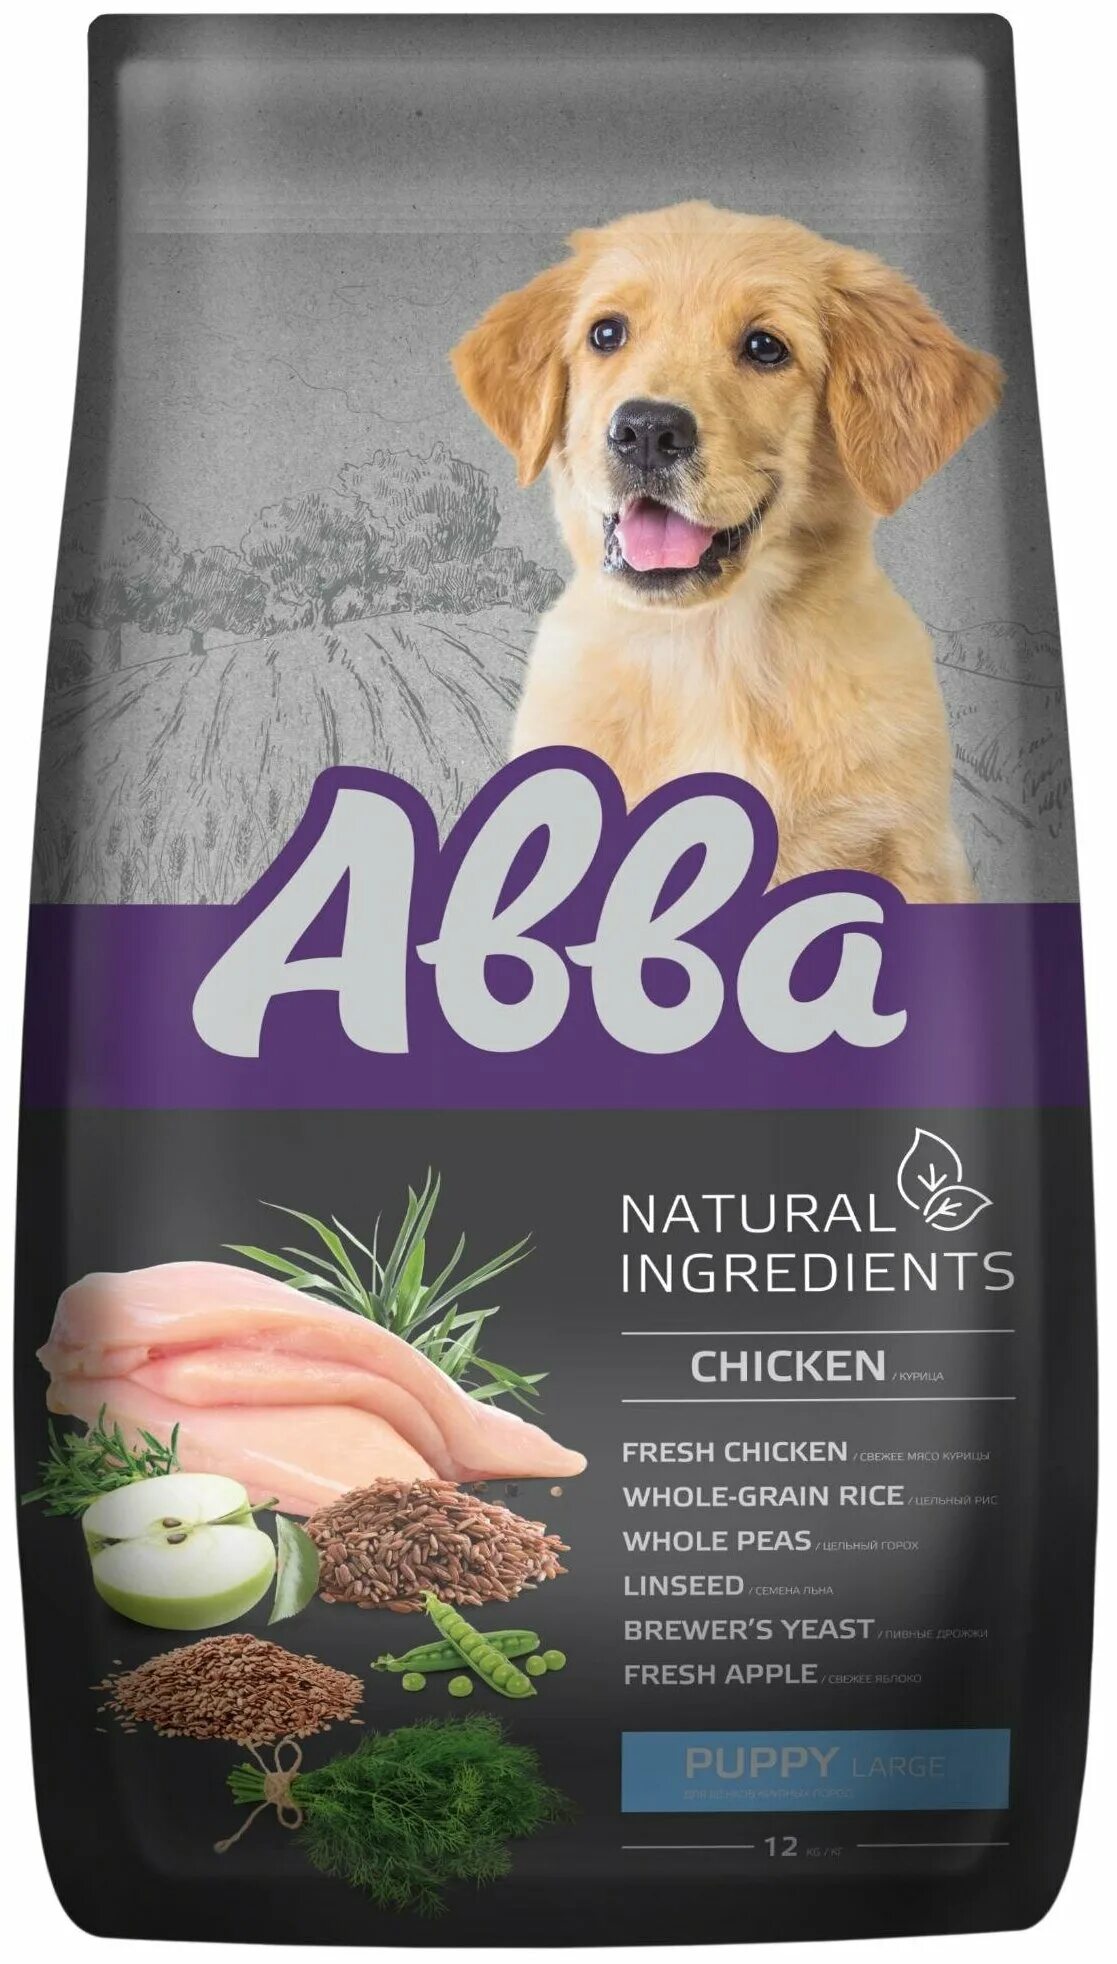 Авва natural ingredients корм для собак. Корм для собак Авва для щенков. Корм ABBA для щенков. Корм абба для собак крупных пород.